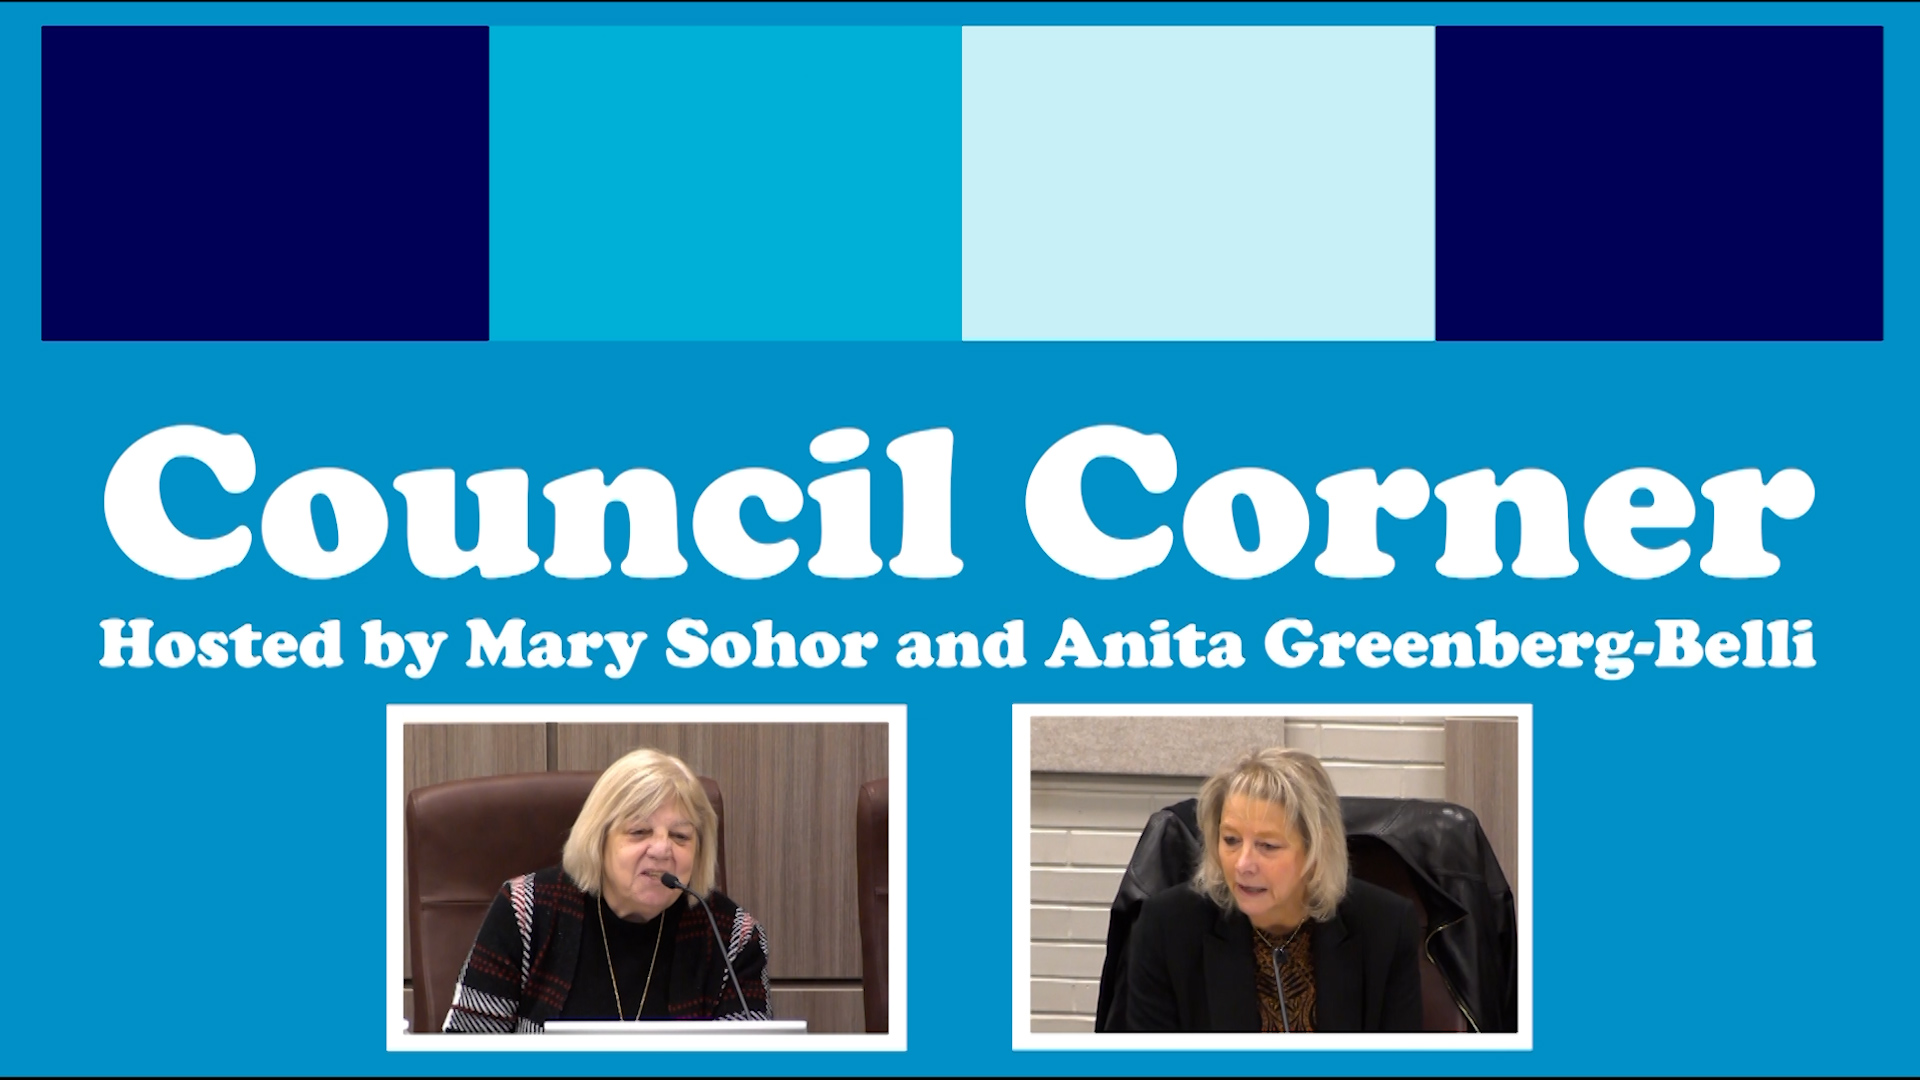 Council Corner